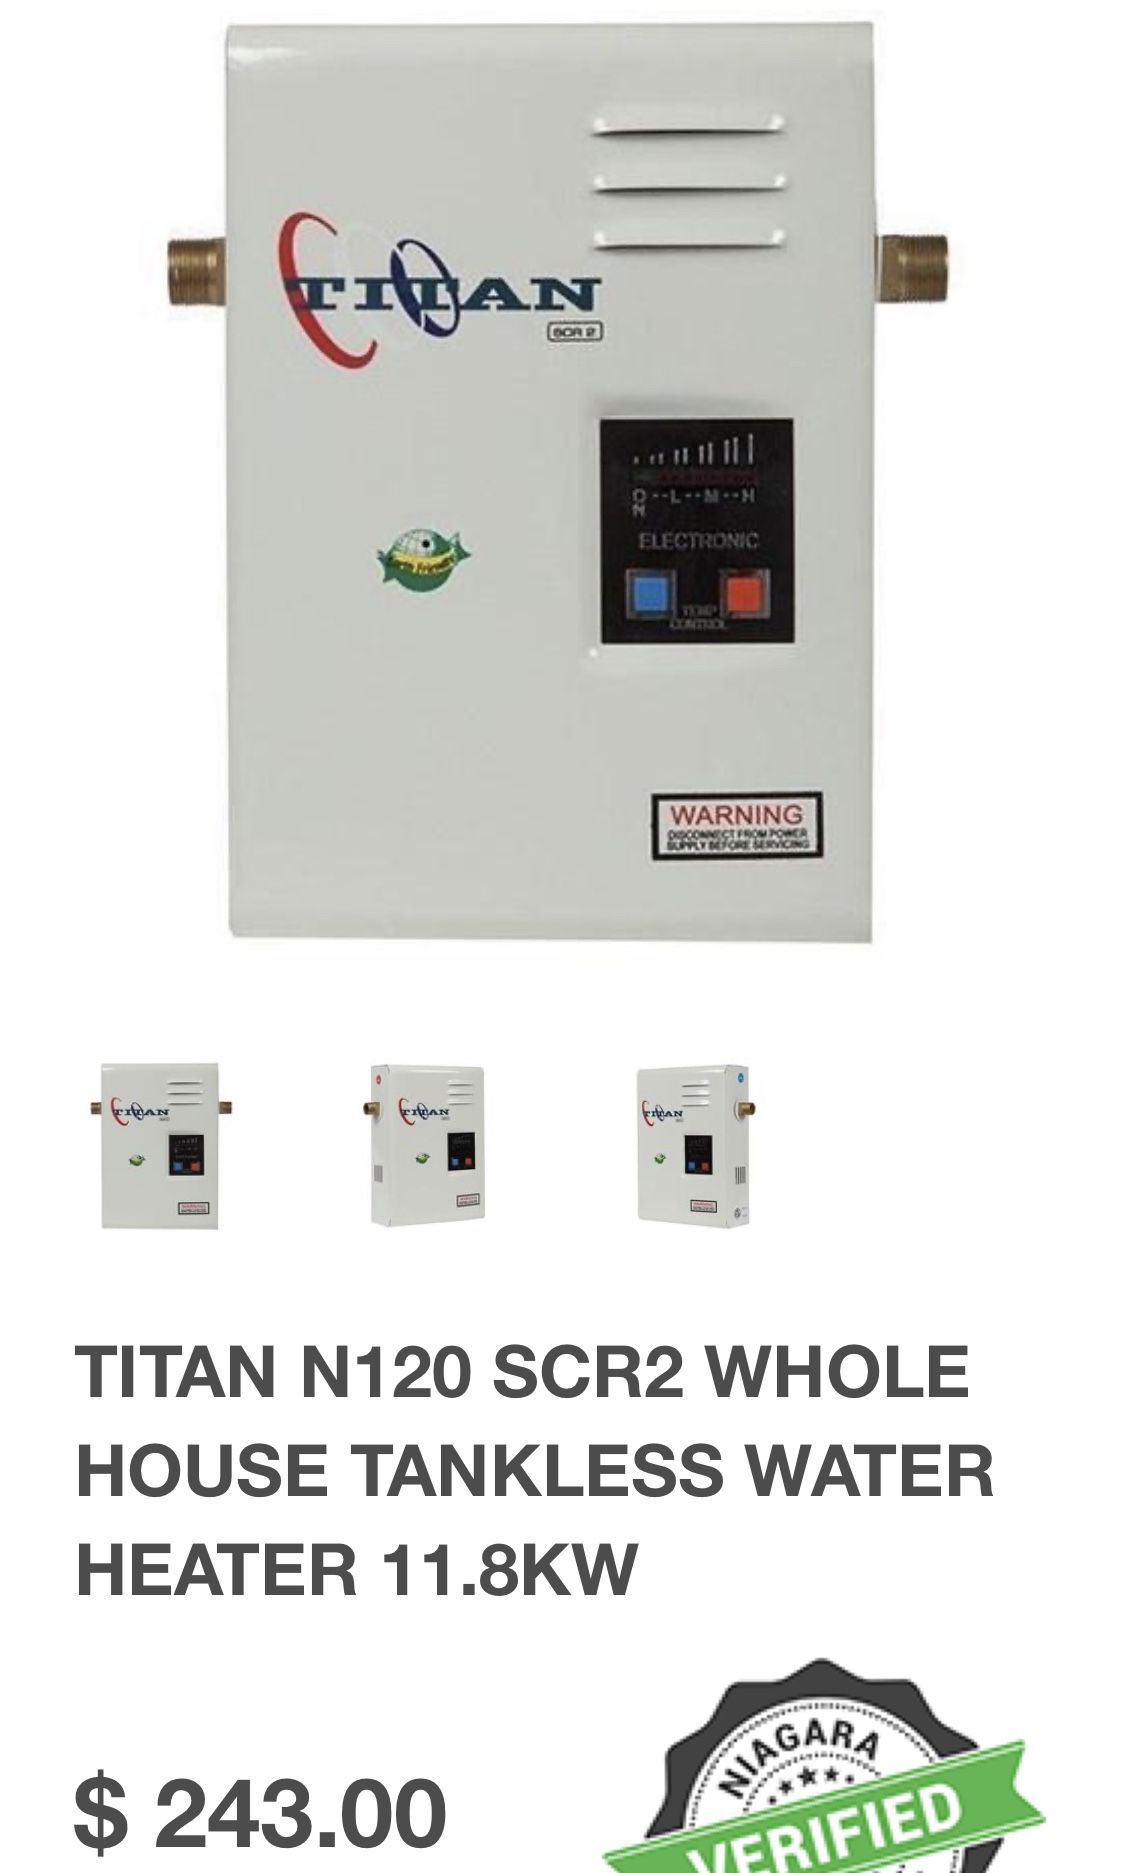 TITAN N120 SCR2 WHOLE HOUSE TANKLESS WATER HEATER 11.8KW ORIGINAL $243.00